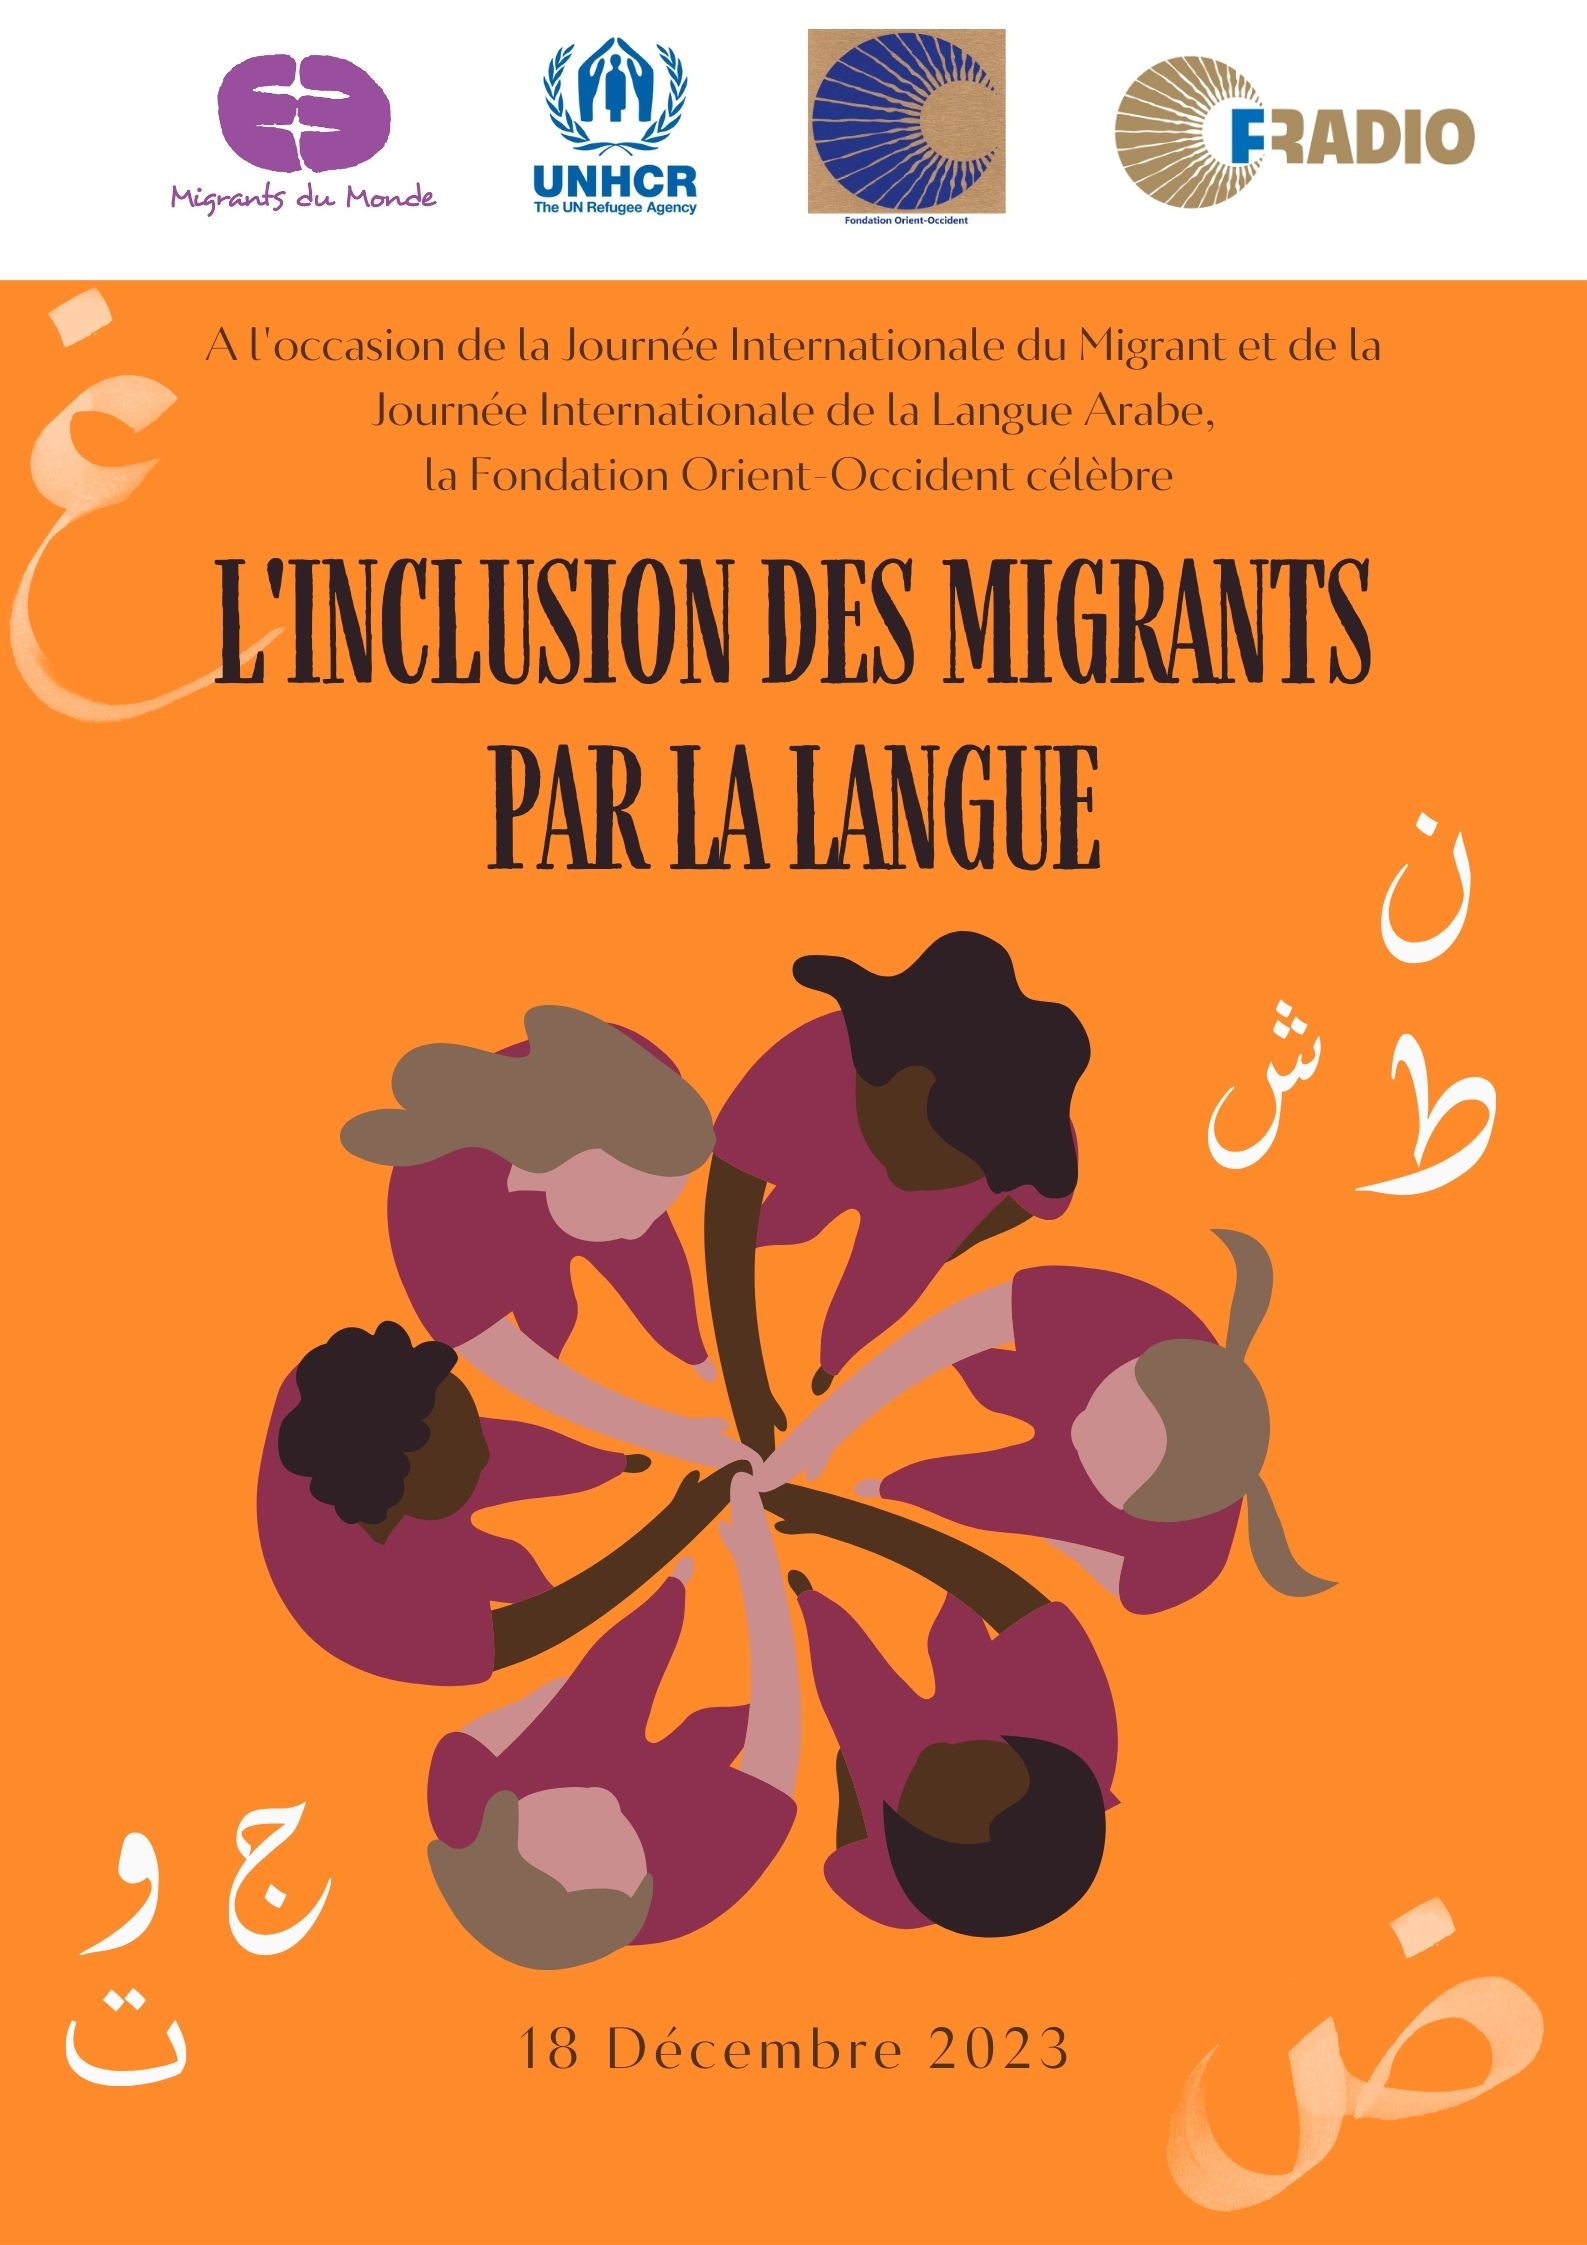 Migrants inclusion through language